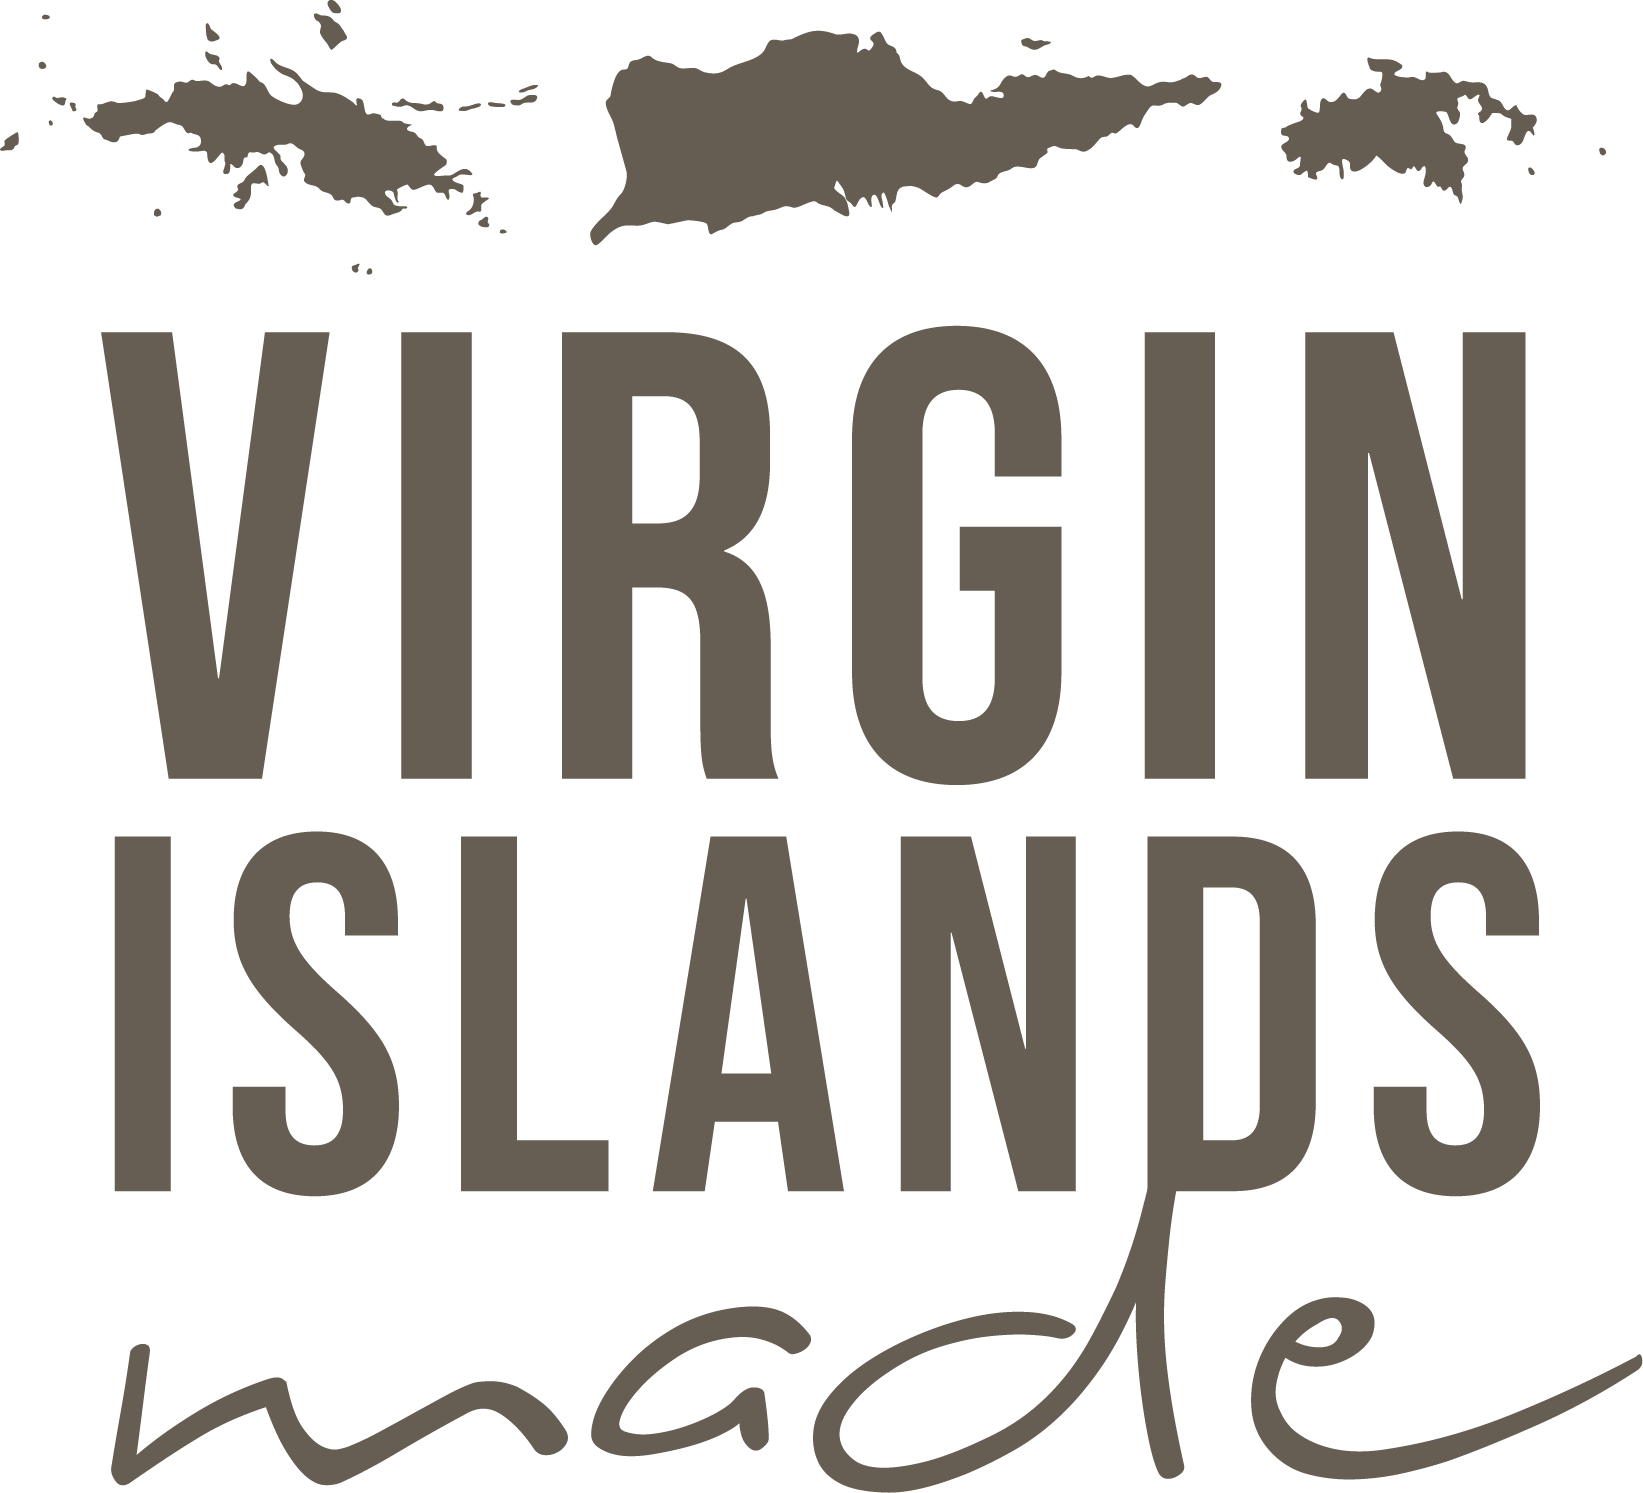 Virgin Islands Made